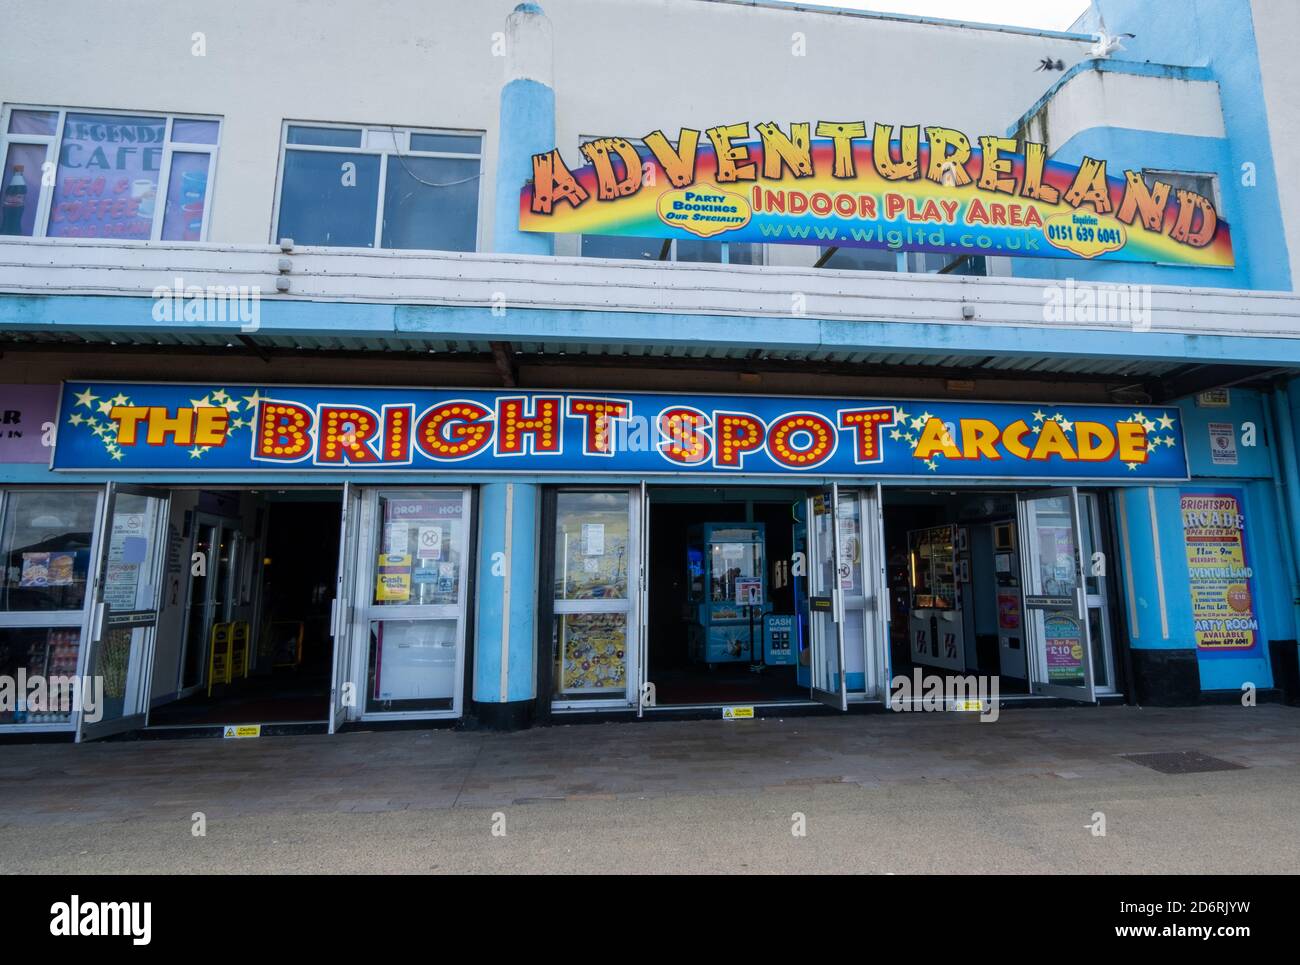 Adventureland Indoor PLay Area dn Bright Spot Arcade in New Brighton Wirral July 2020 Stock Photo